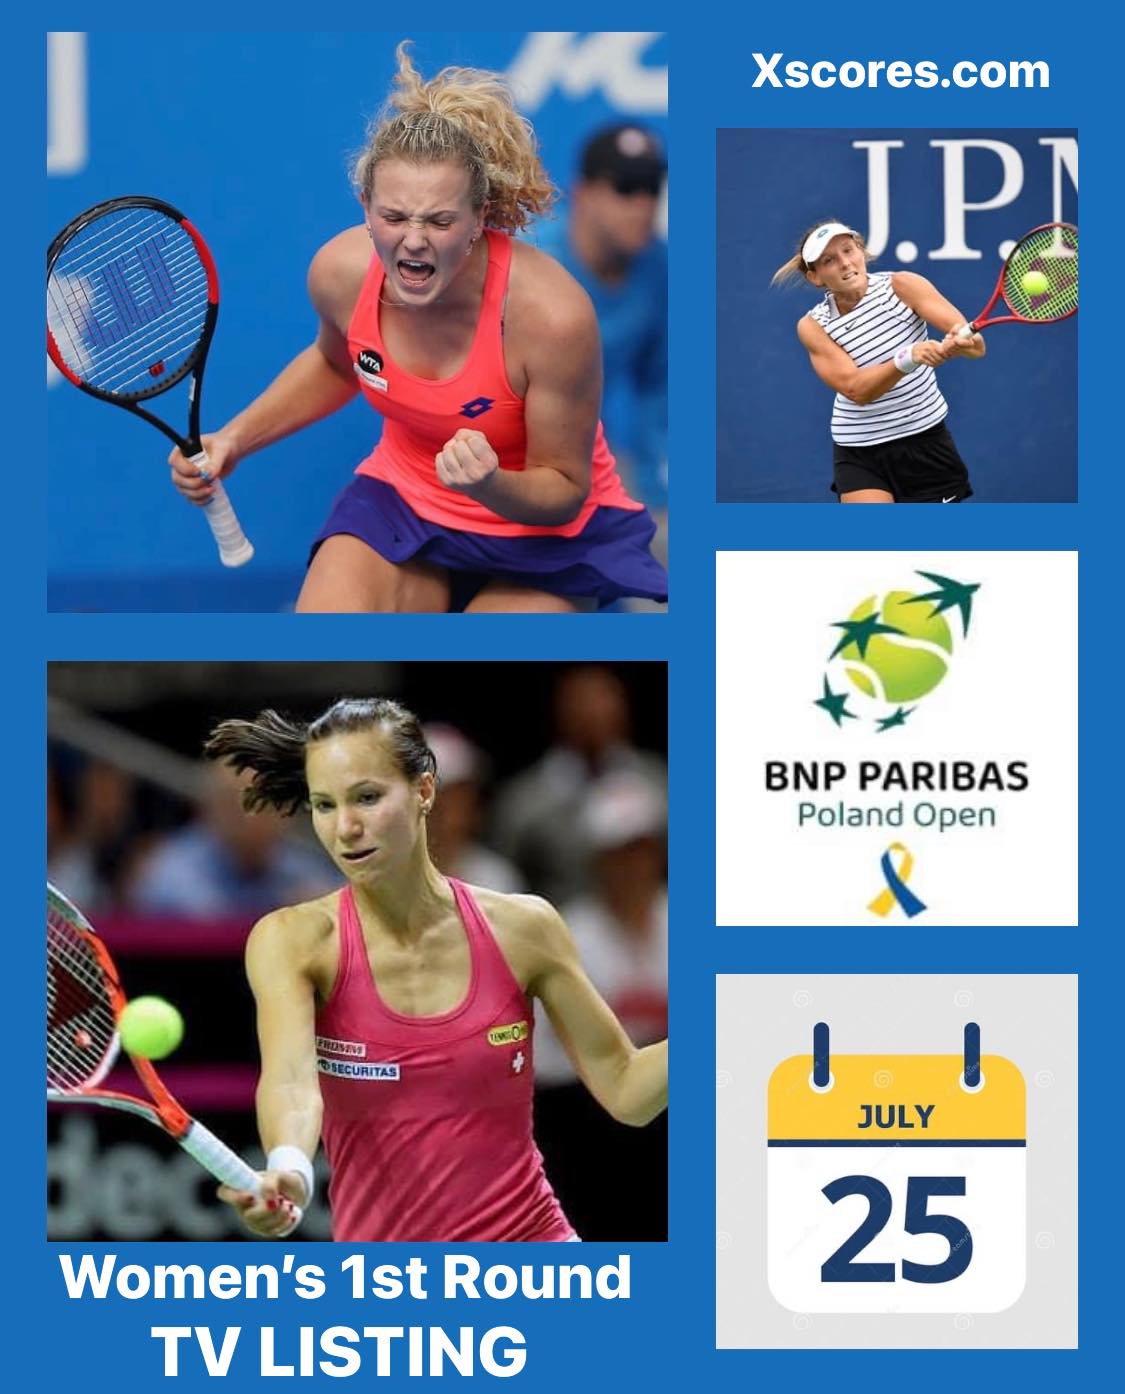 Tennis- WTA 250 - Surface Clay -BNP Paribas Poland Open, WARSAW, POLAND